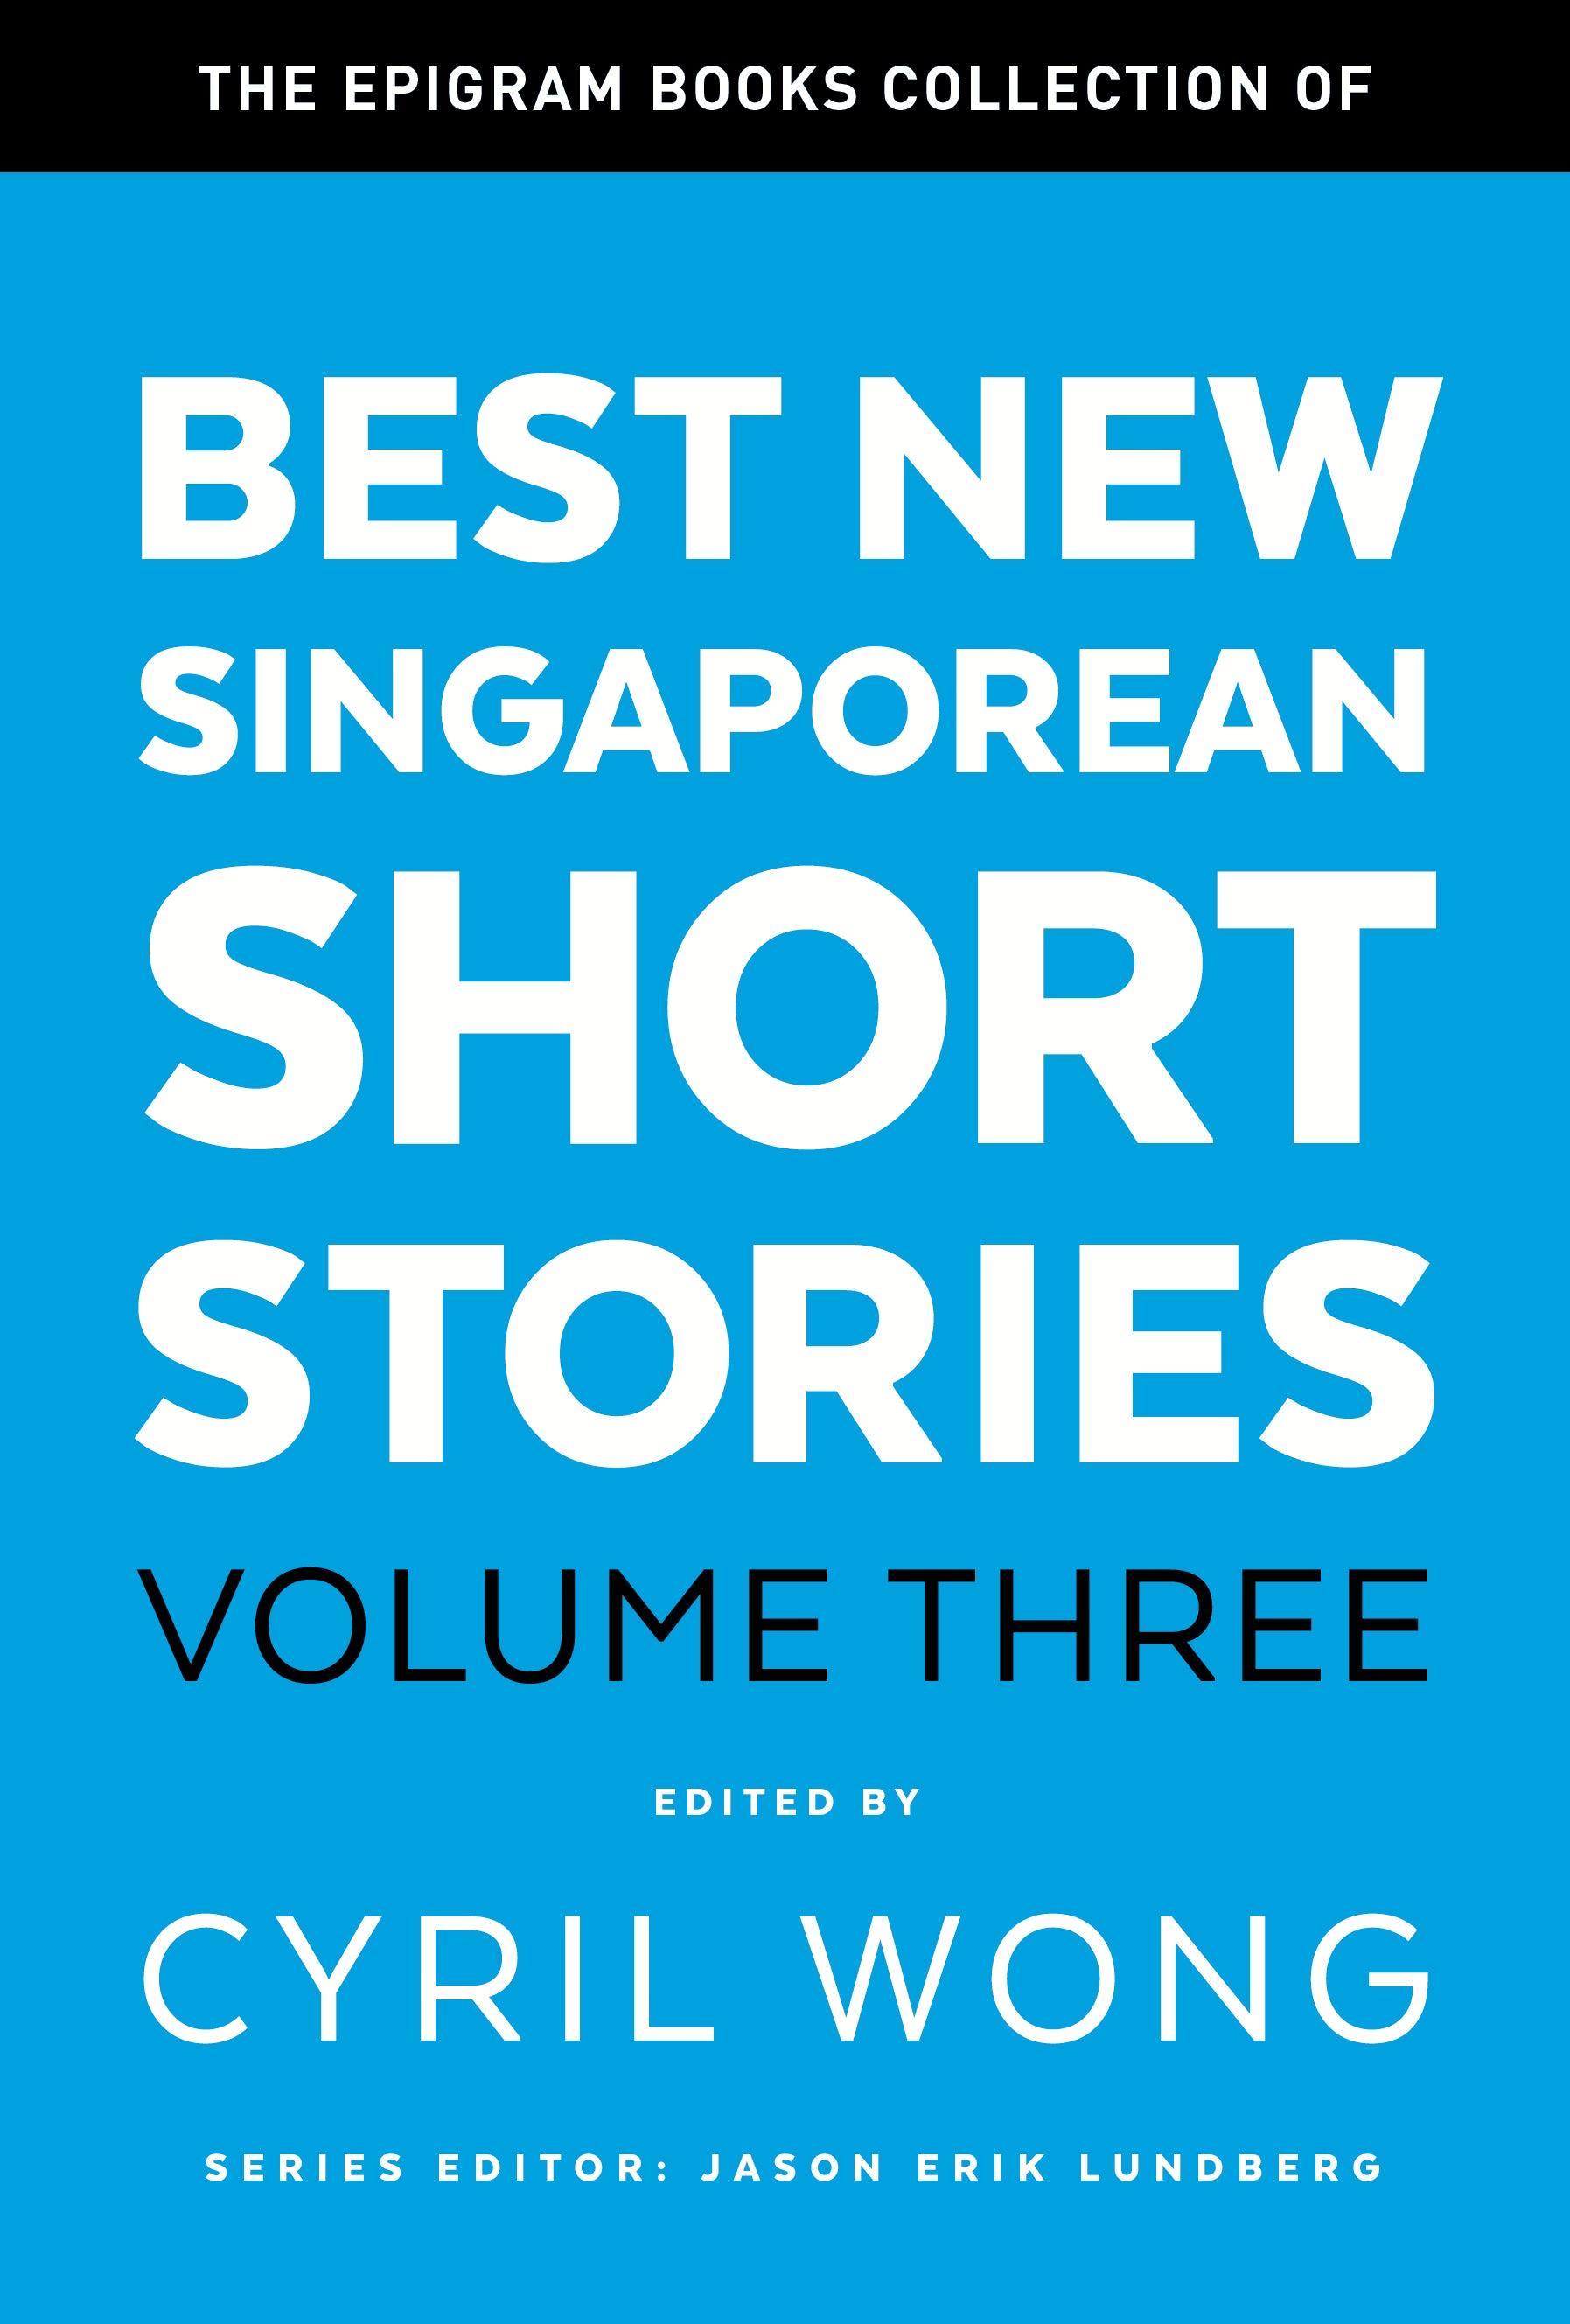 The Epigram Books Collection of Best New Singaporean Short Stories: Volume Three